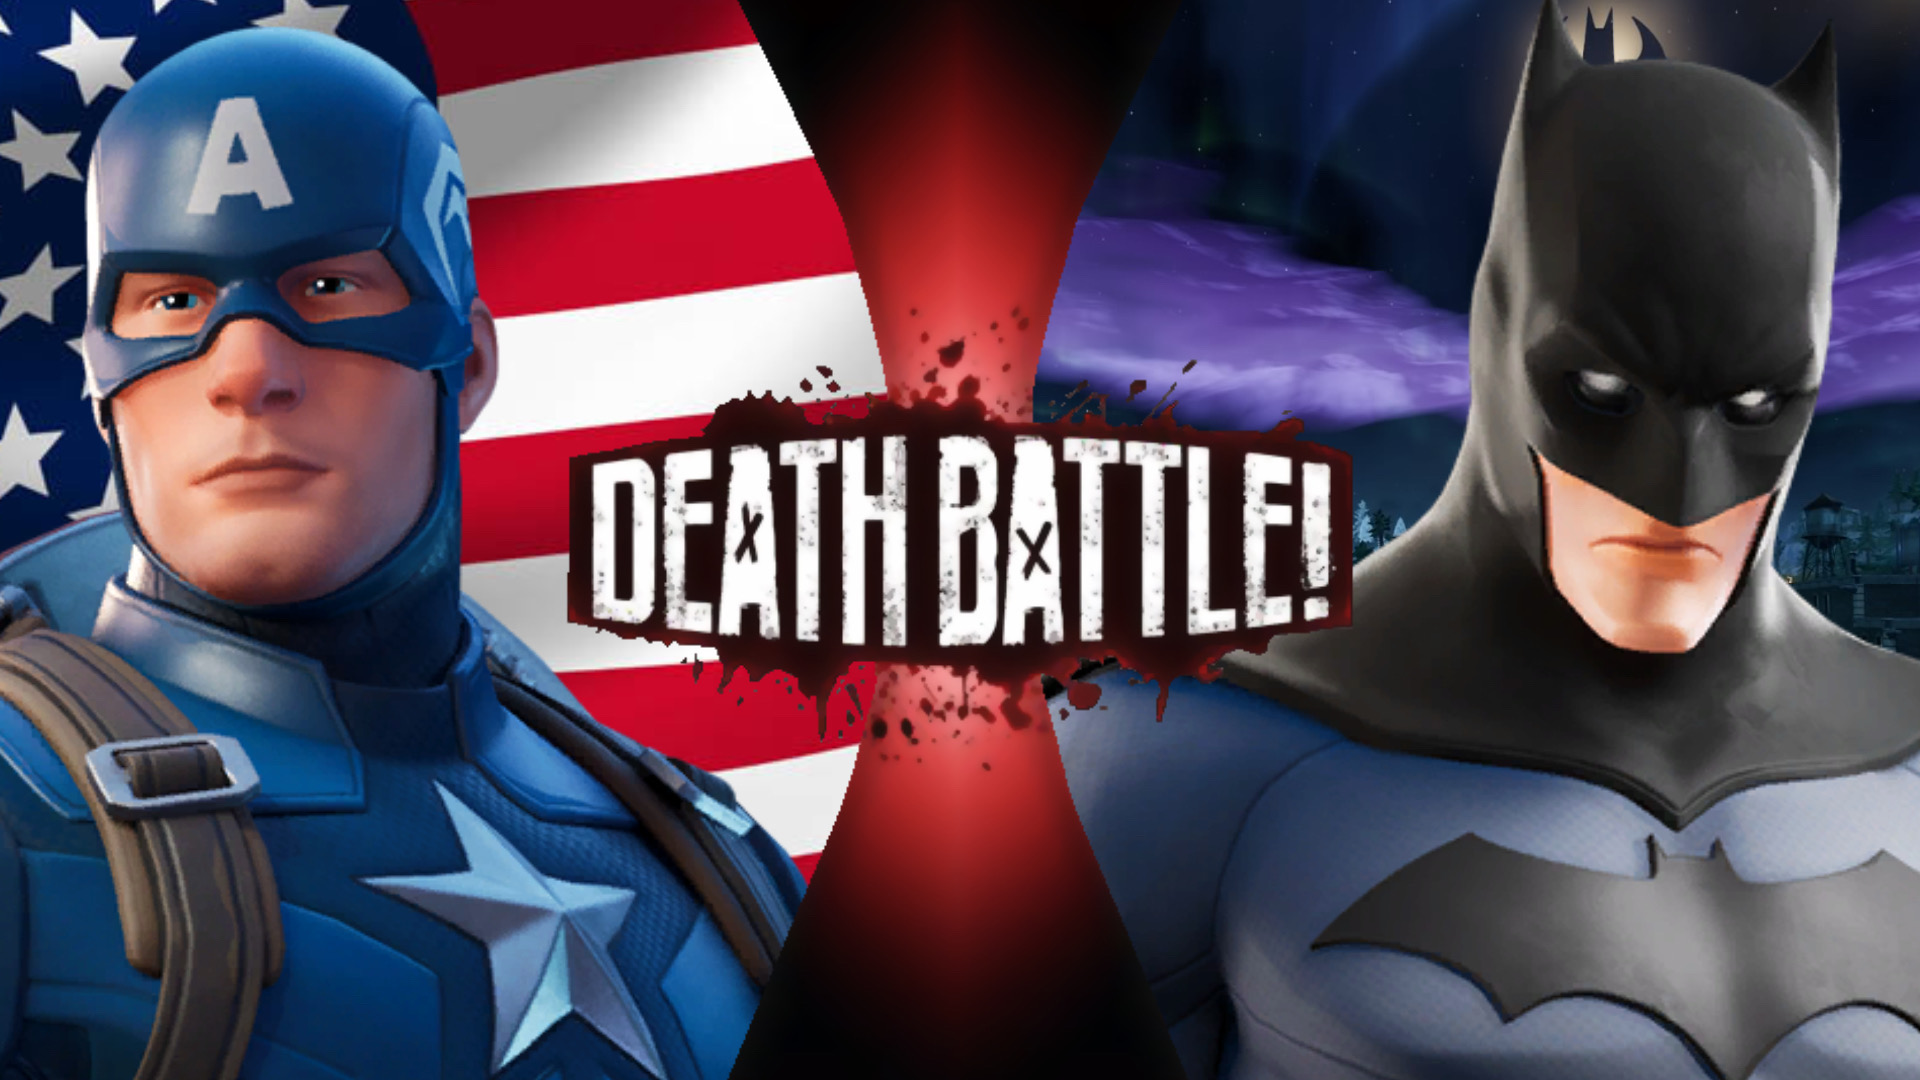 Batman VS Captain America (Fortnite Edition) by happyowo on DeviantArt